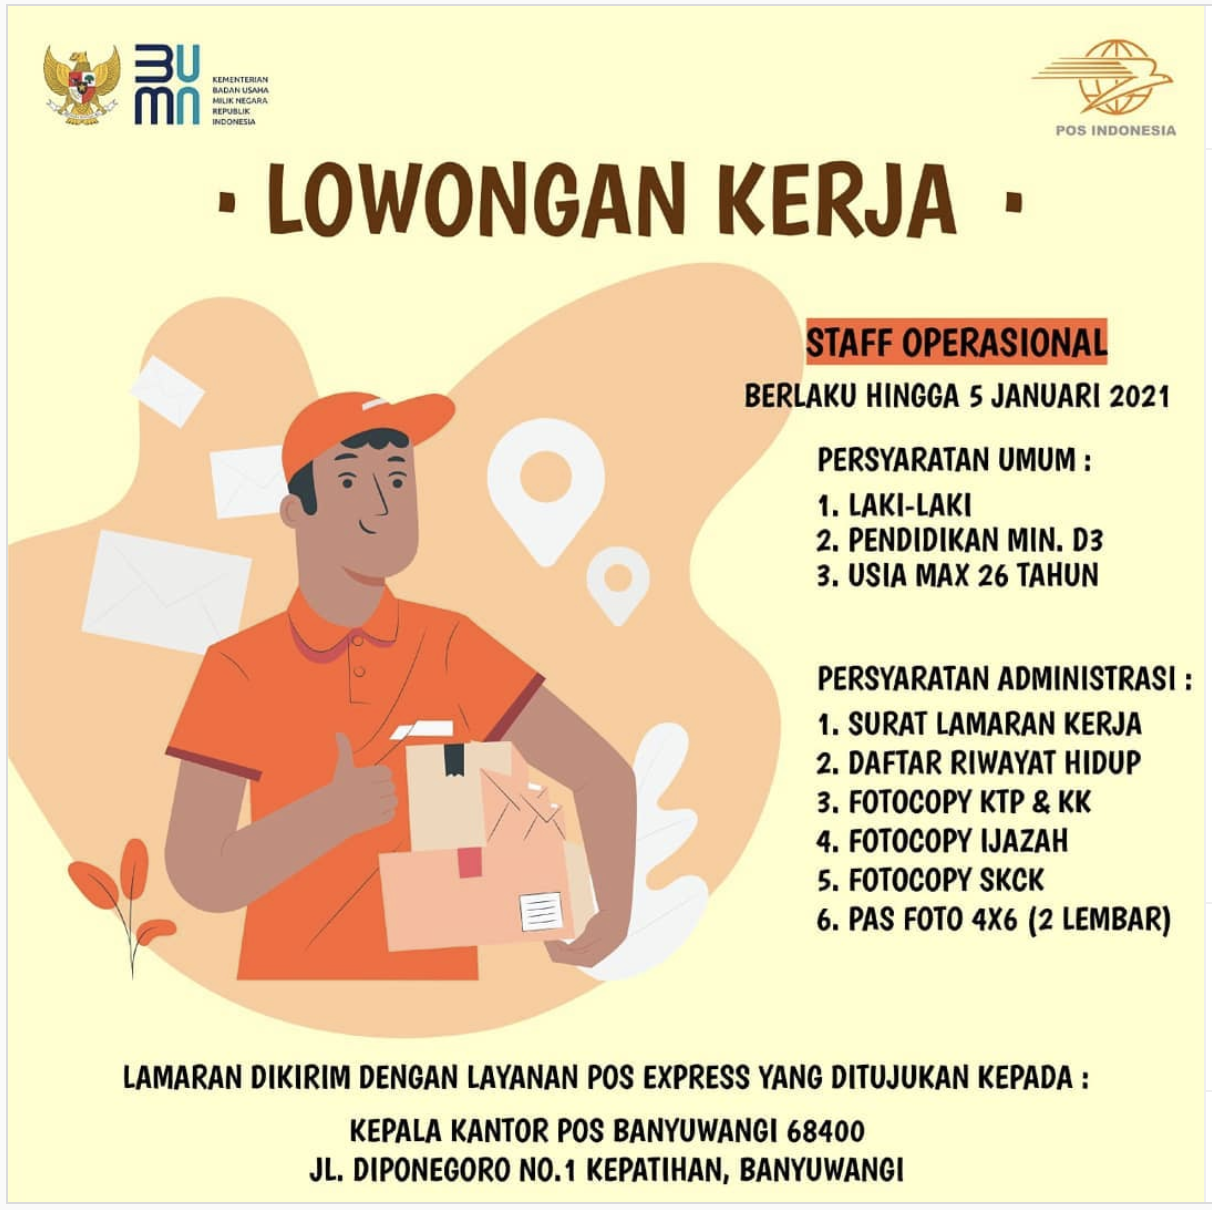 Lowongan Kerja Pos Indonesia - LOKERNAS